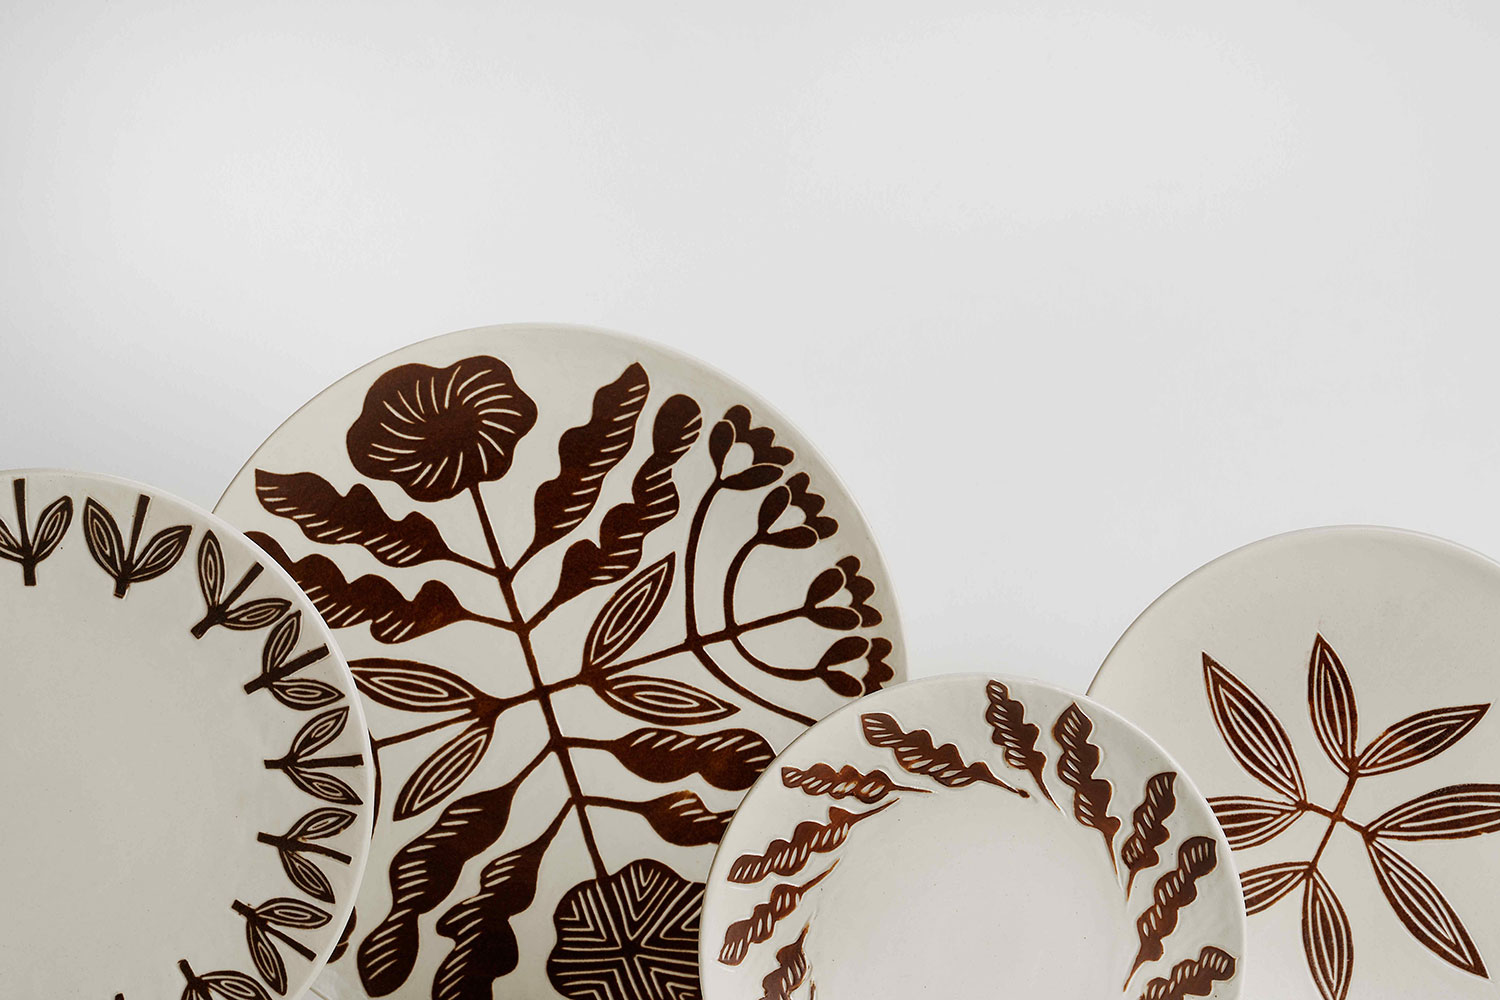 Kevala Ceramics in collaboration with Nihi Sumba